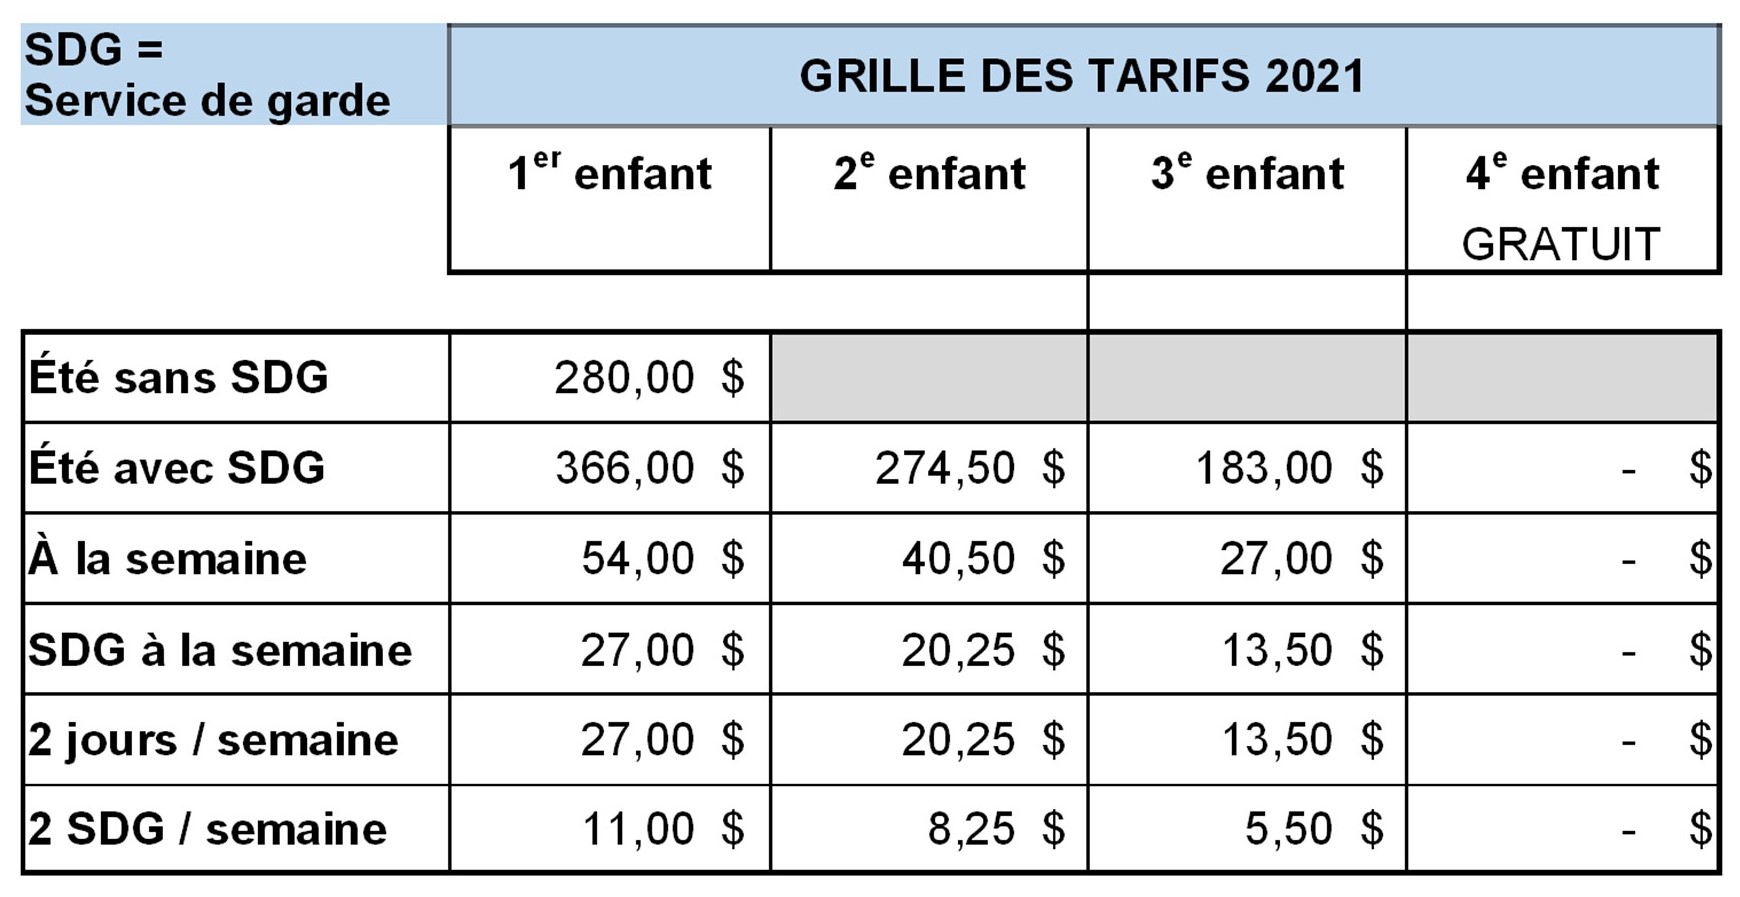 Grille tarifaire CDJ2021